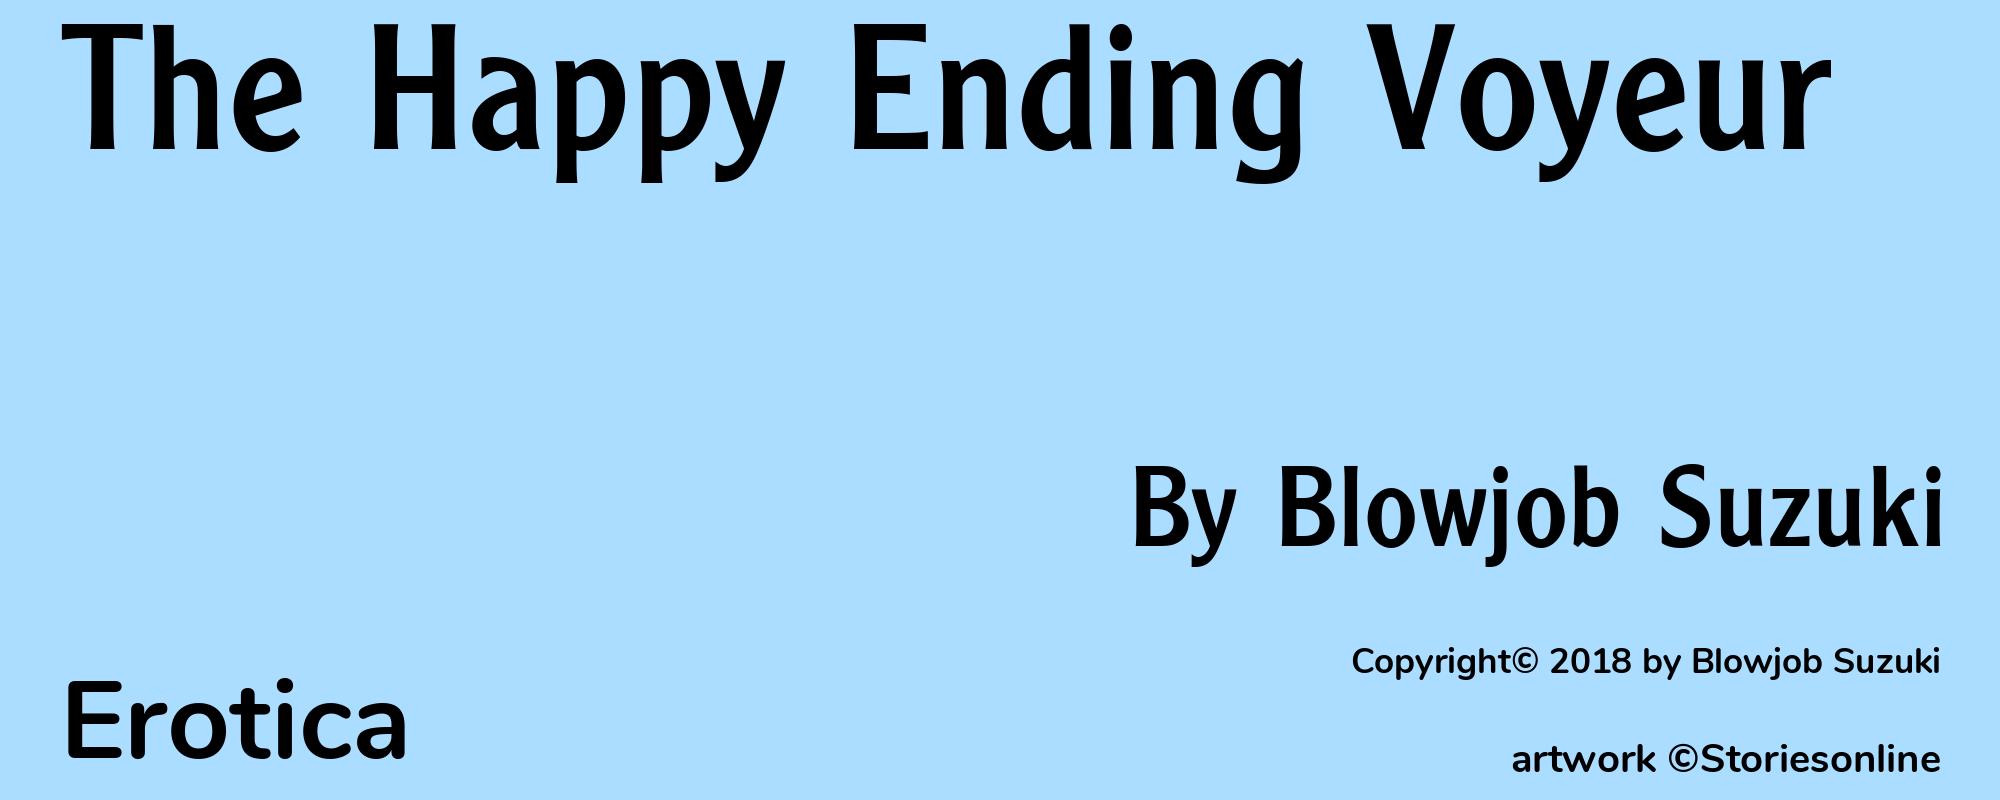 The Happy Ending Voyeur - Cover